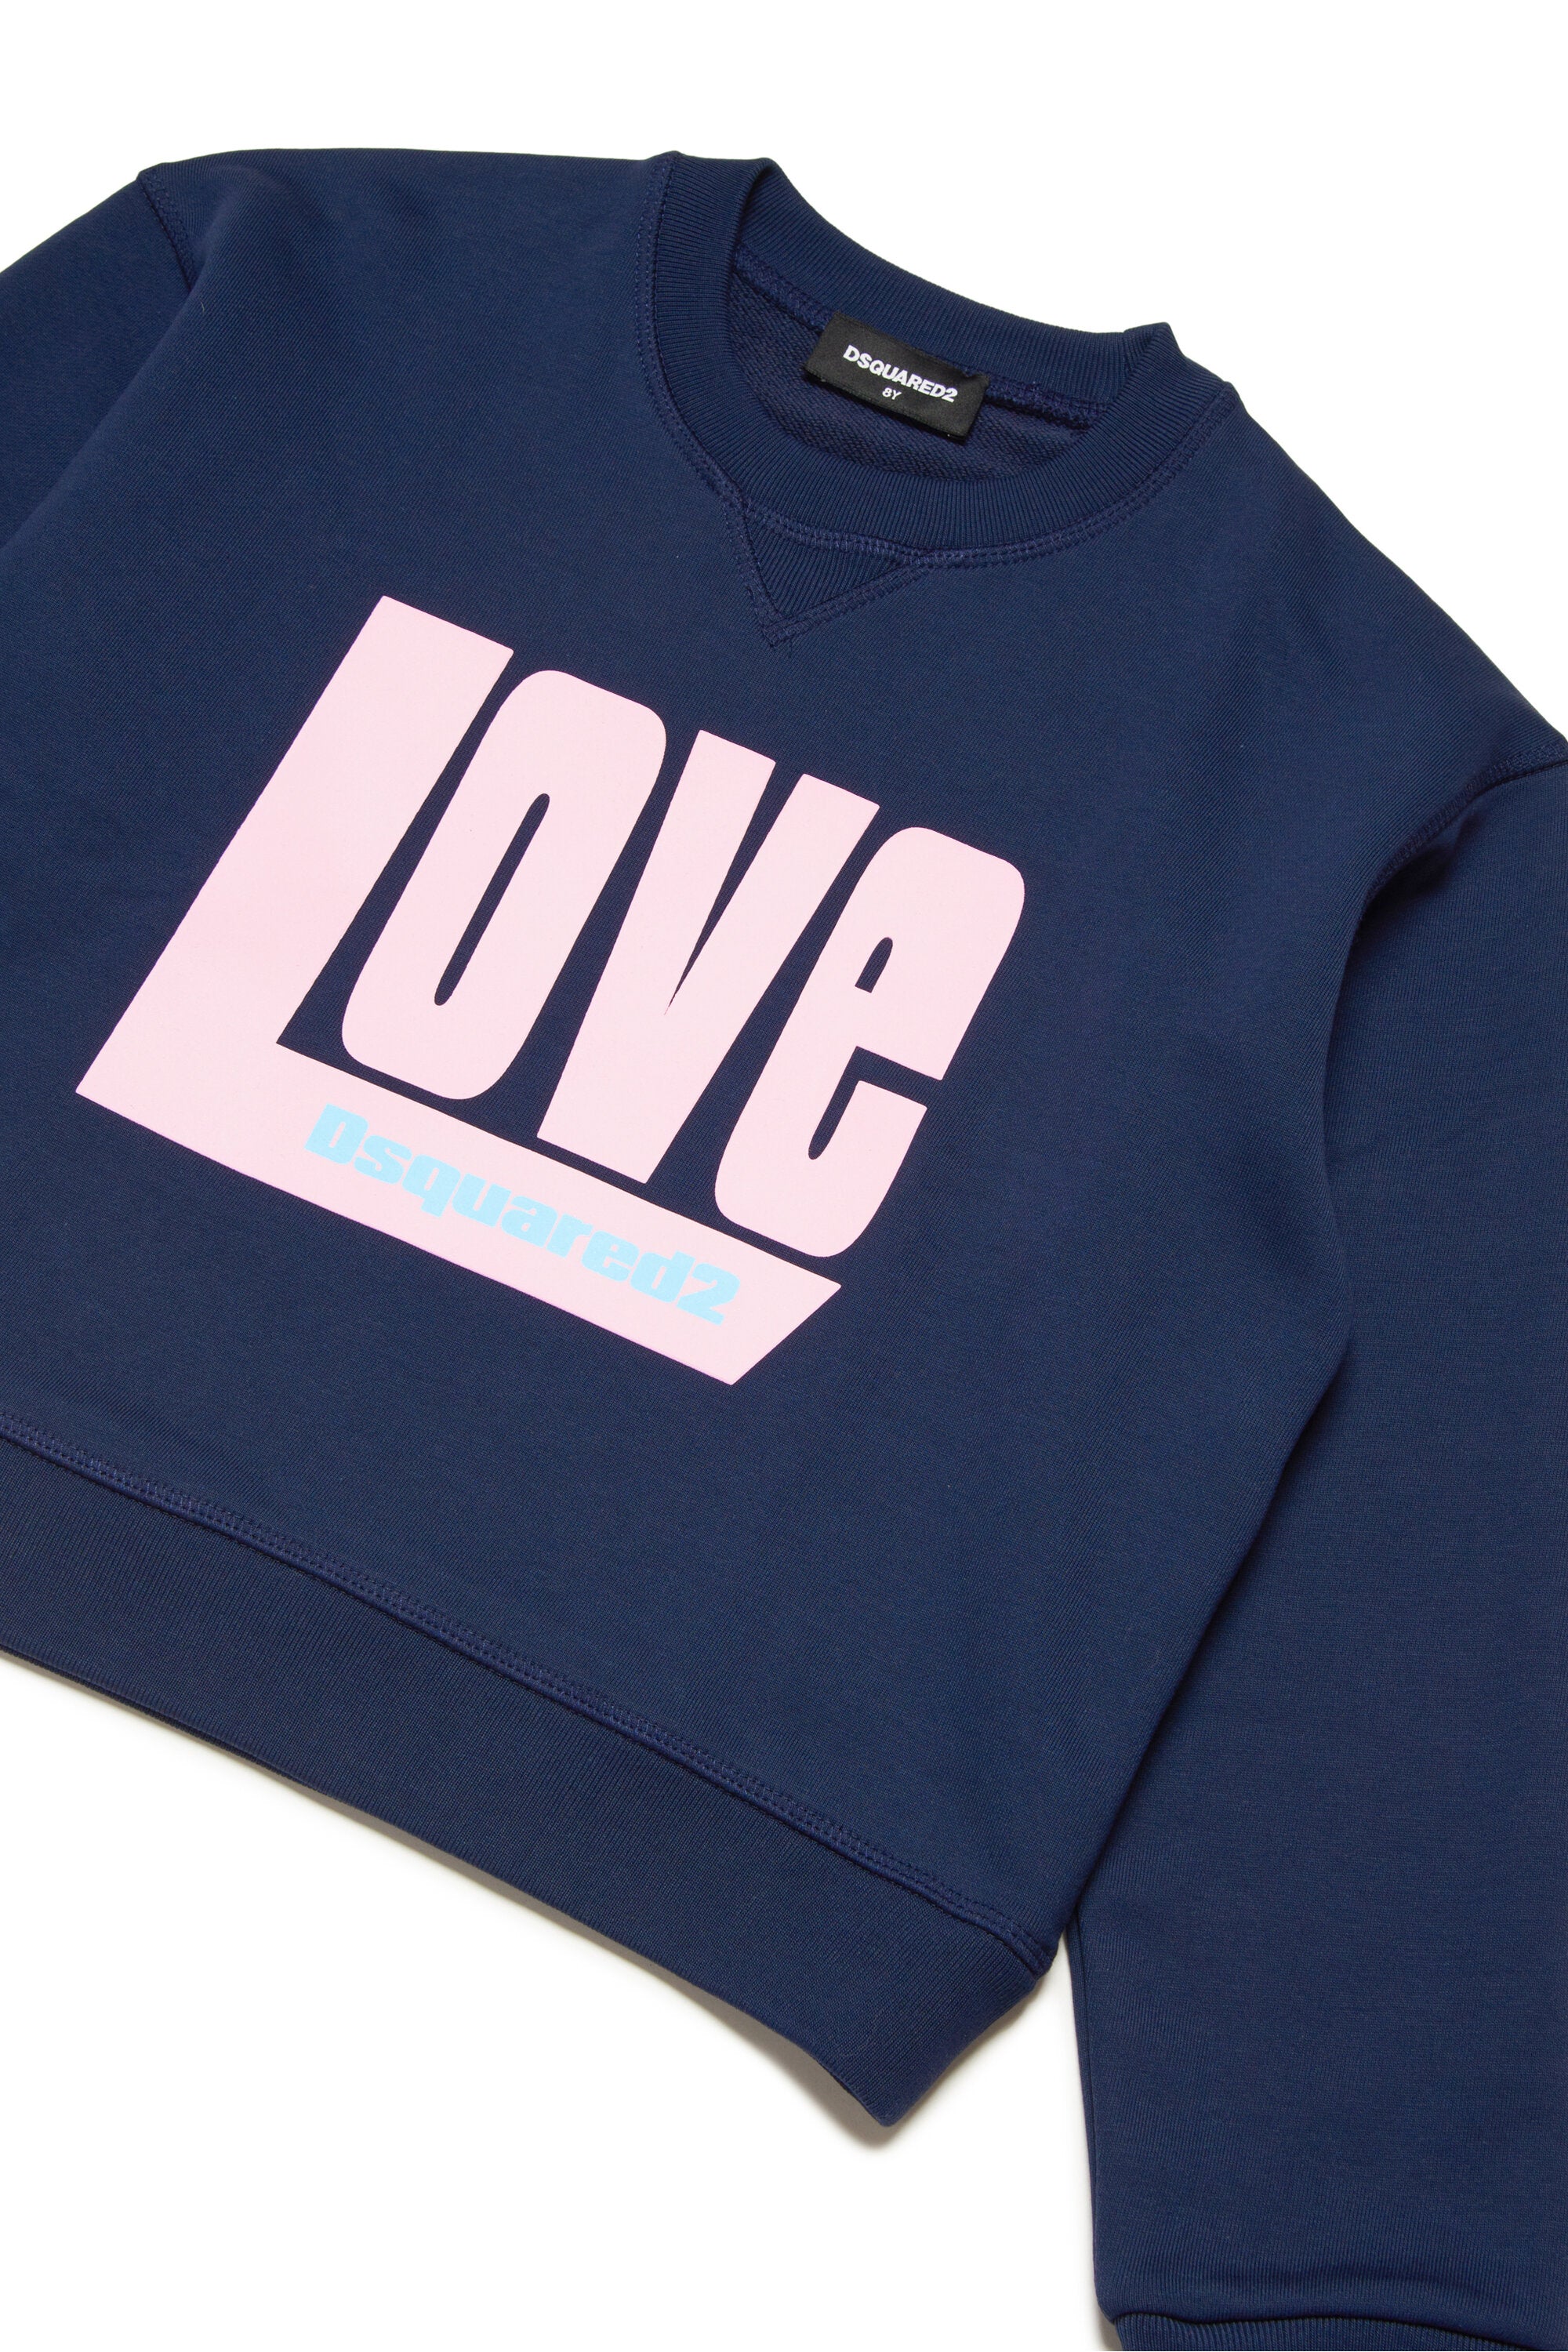 Cotton crew-neck sweatshirt with Love lettering